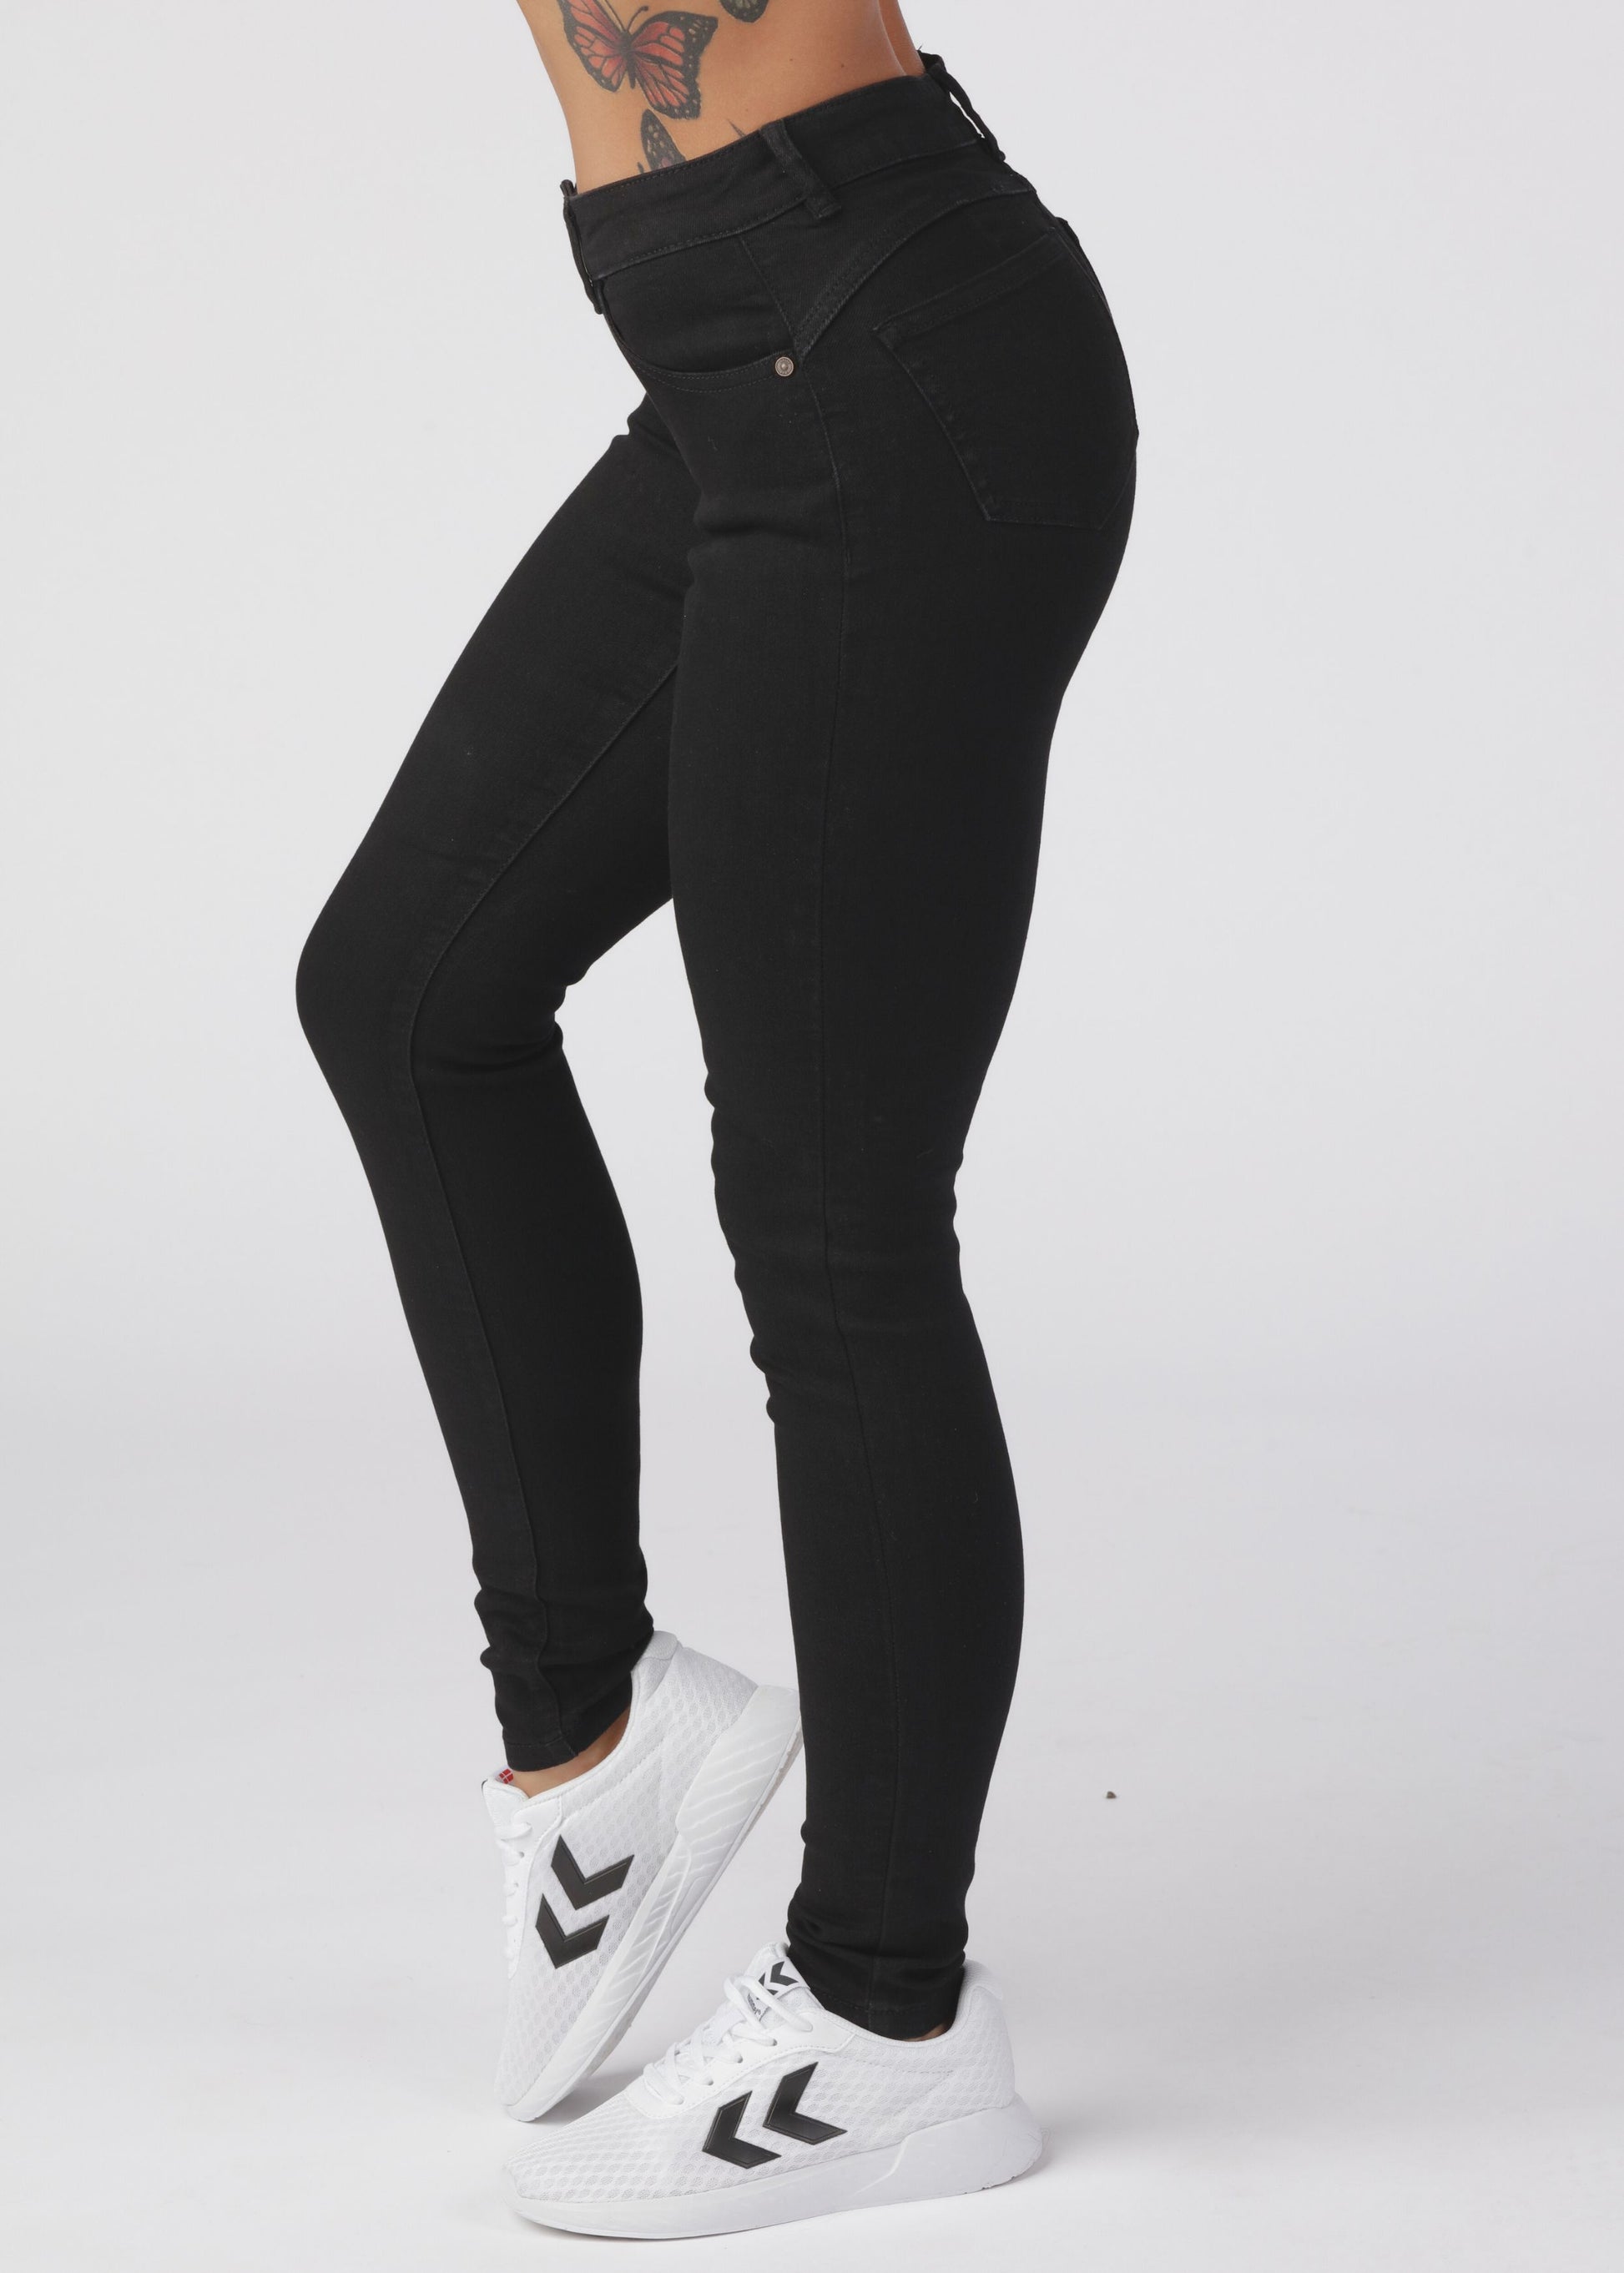 Jen Shaper Jeans - Black Denim - for kvinde - NOISY MAY - Jeans